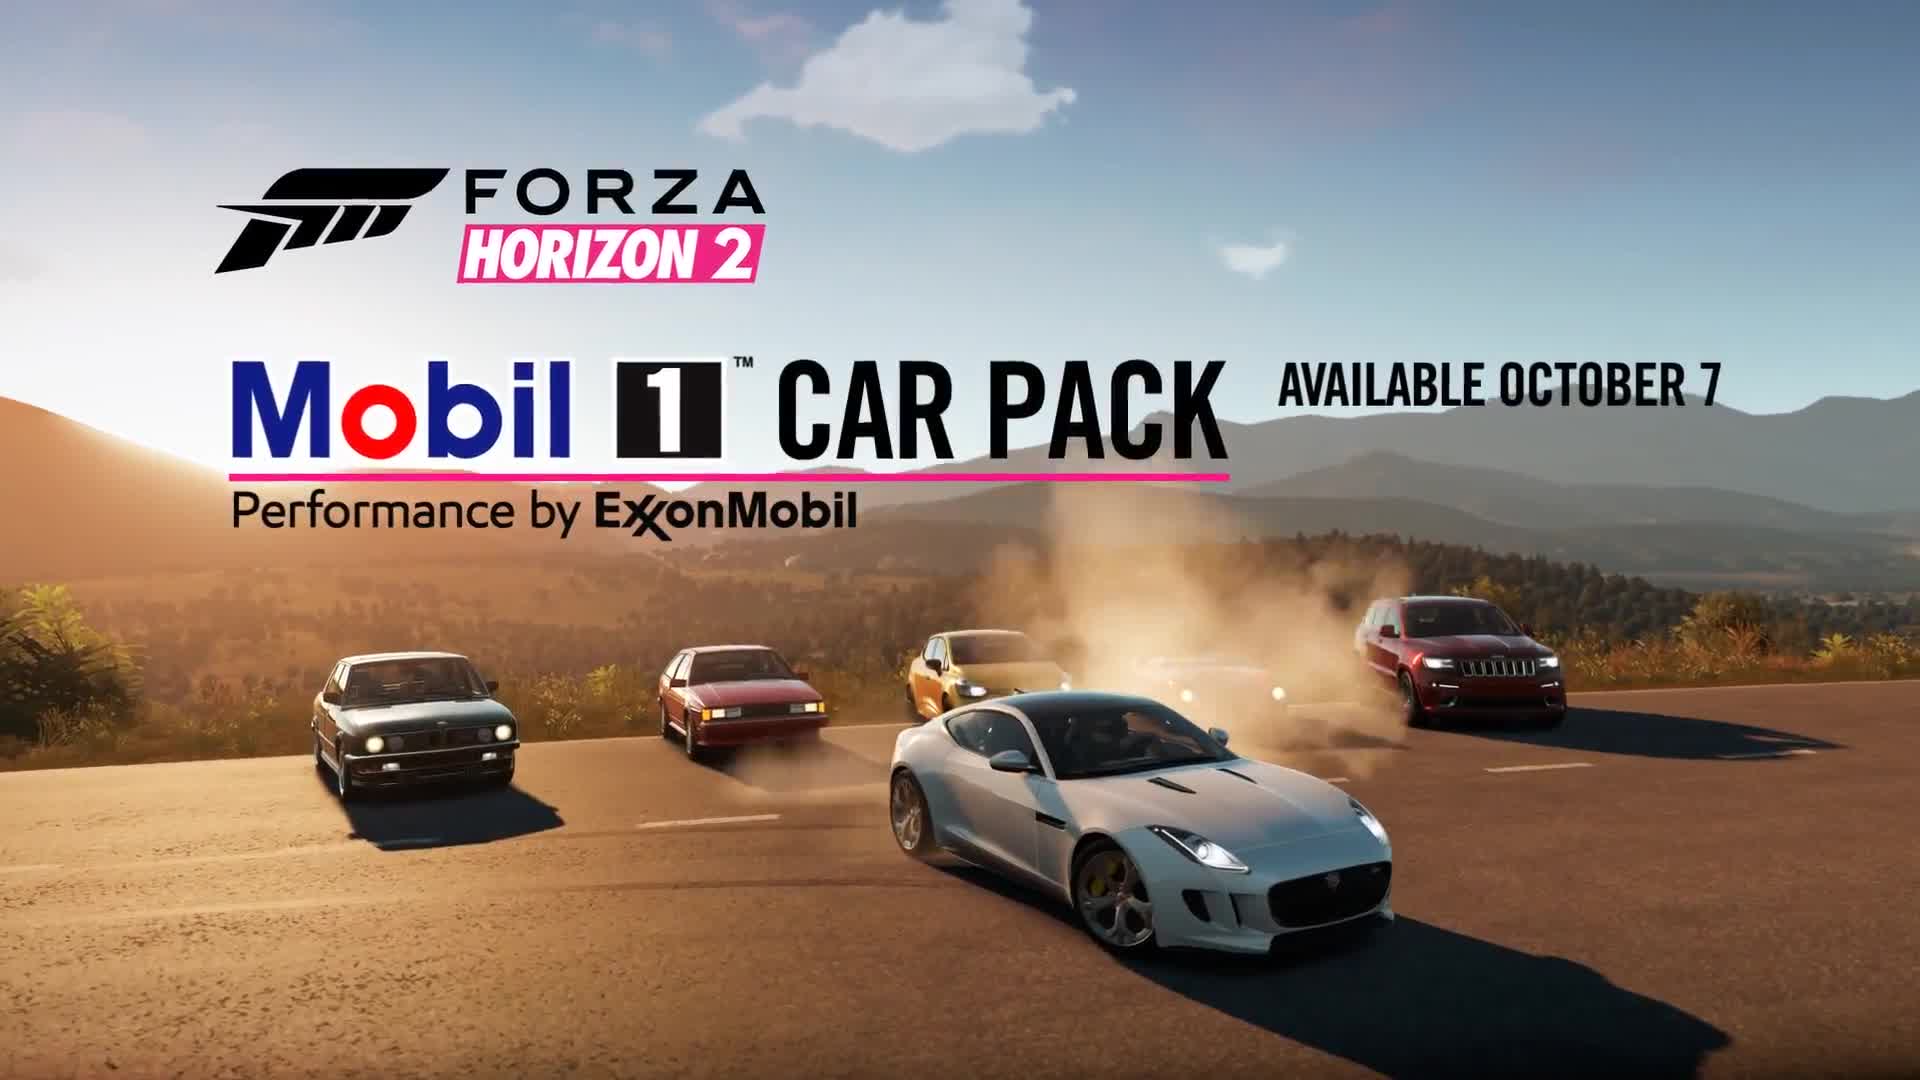 Forza Horizon 2 Mobil 1 pack